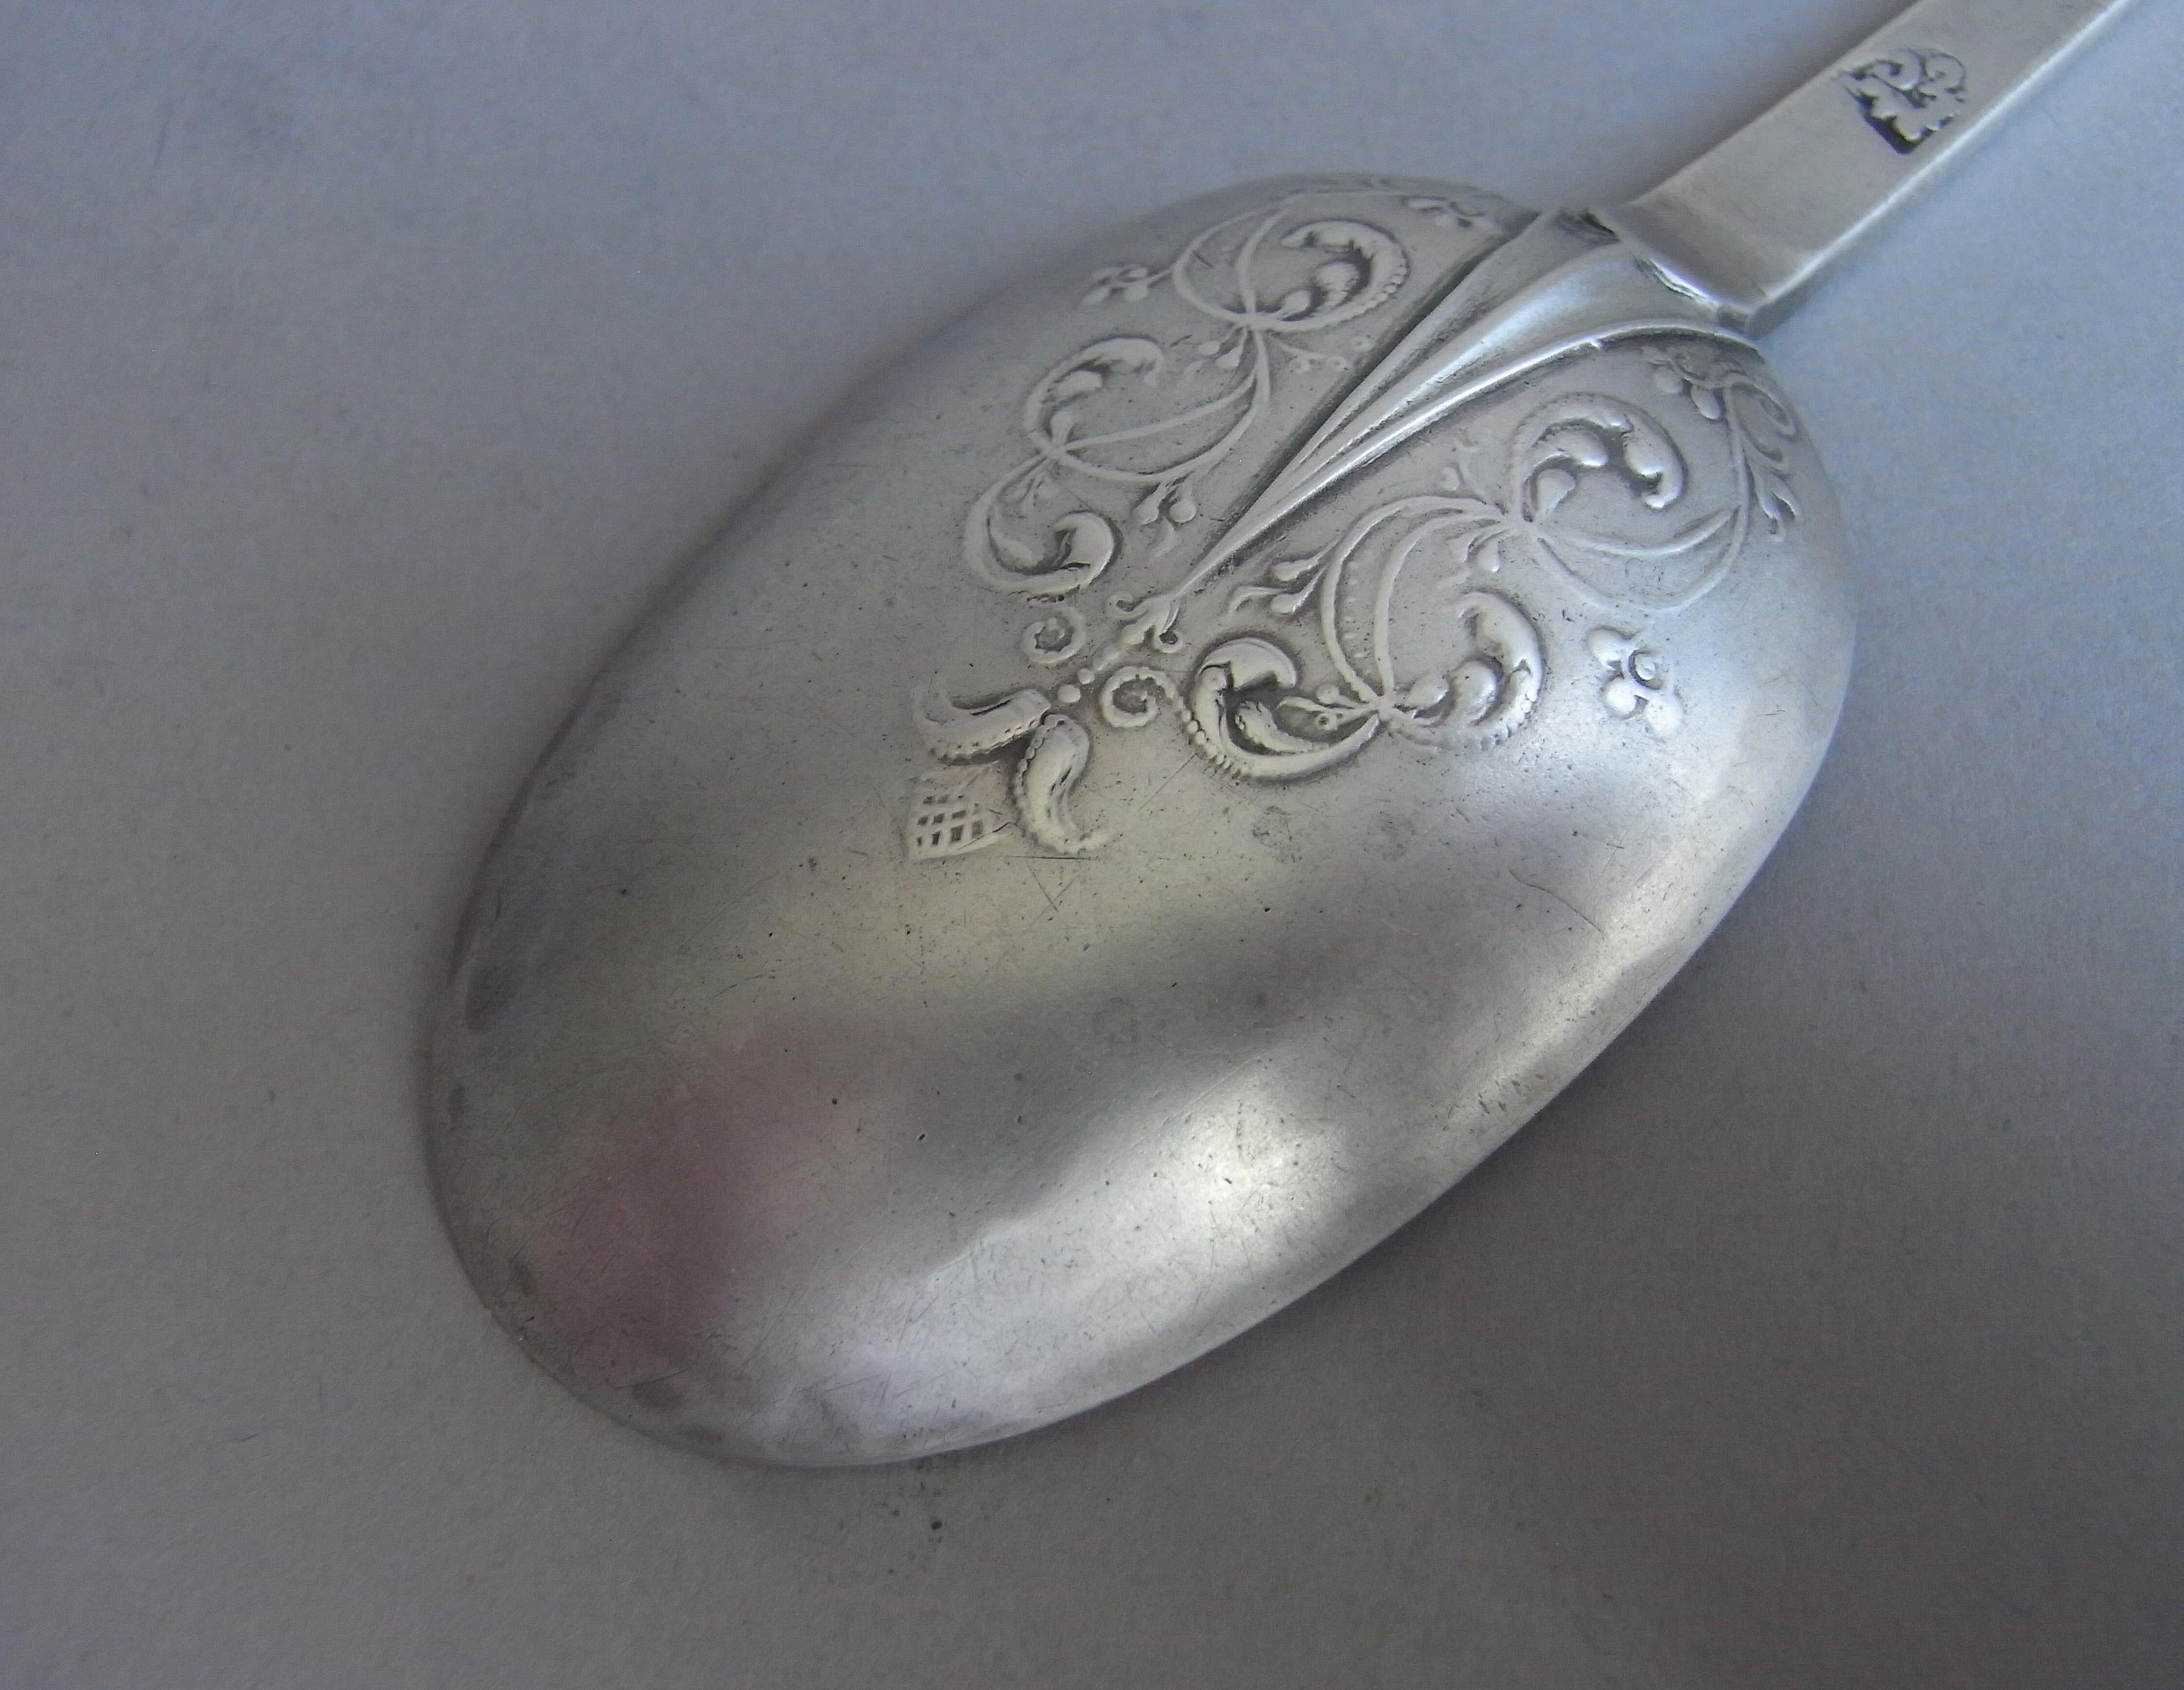 European Charles II Laceback Trefid Spoon made in London in 1682 by Lawrence Coles